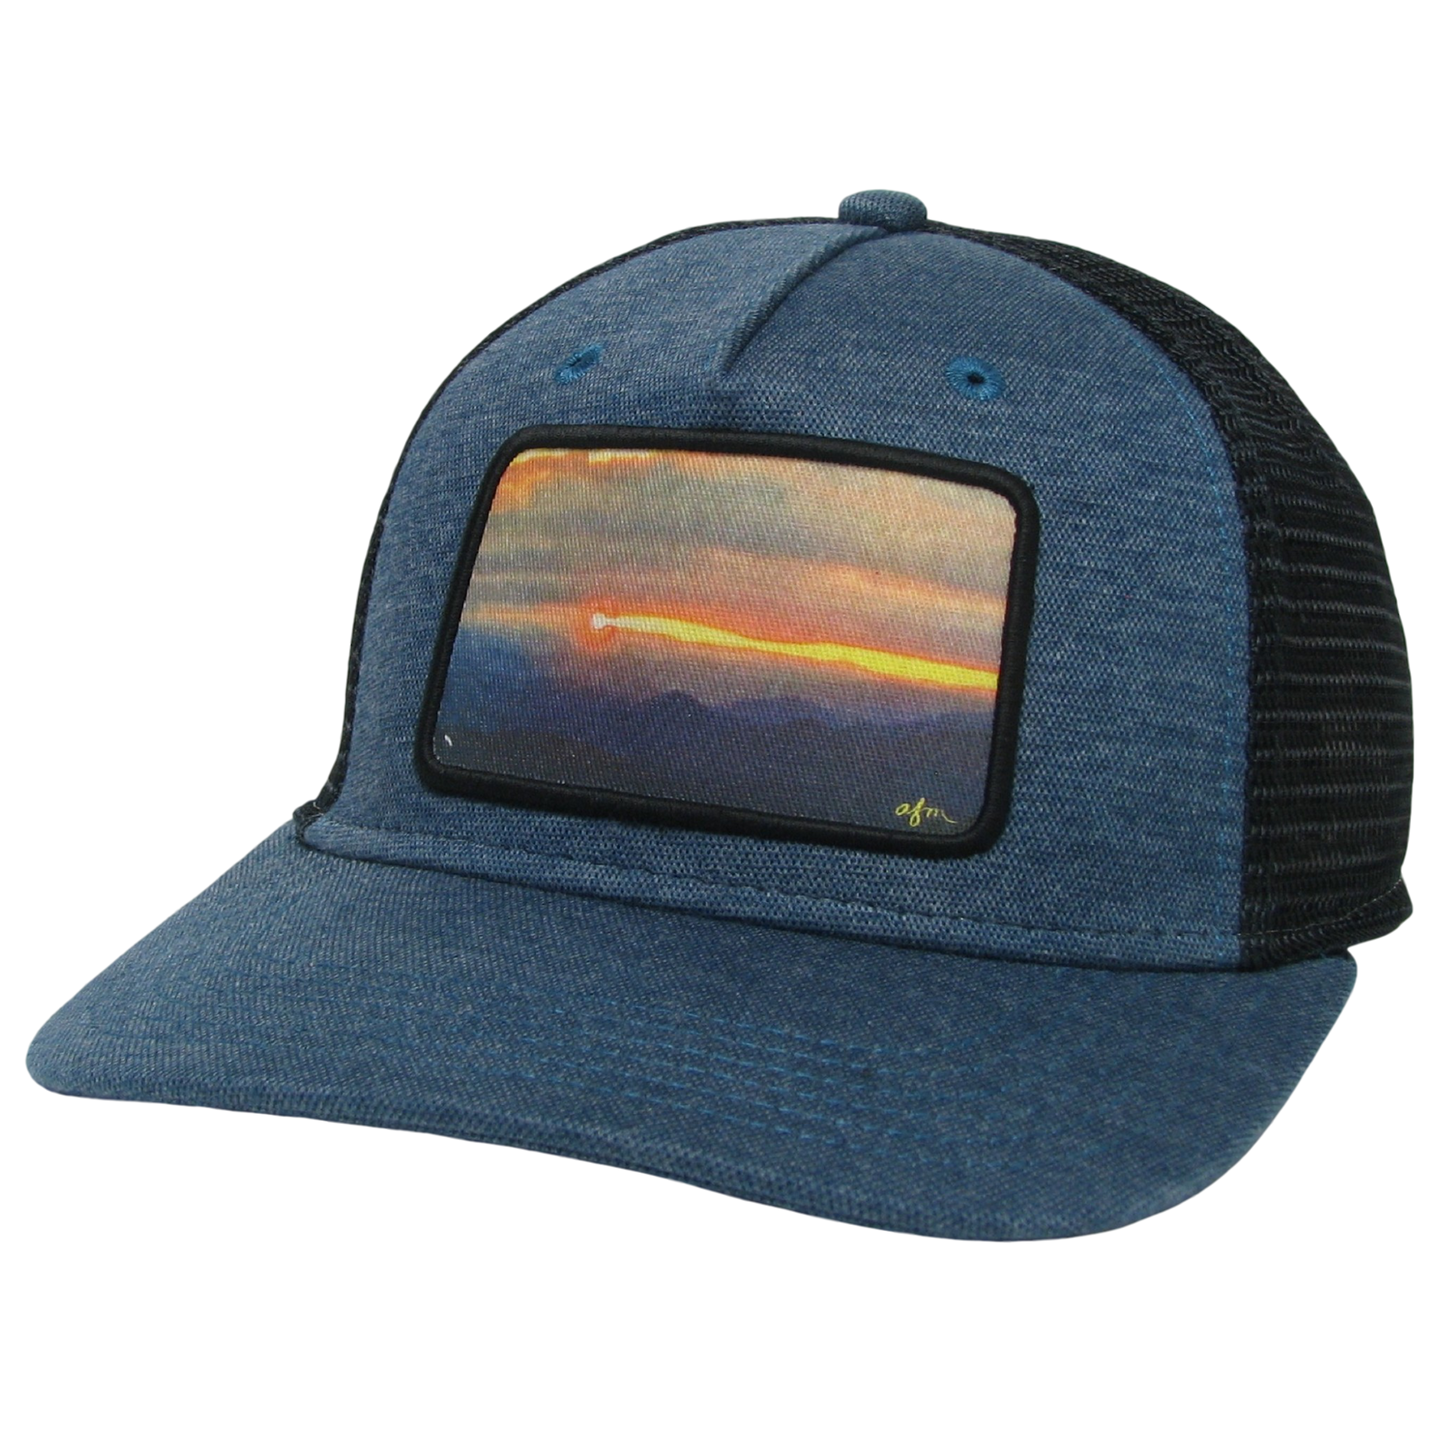 Mountain Sunset Roadie Trucker Hat in Marine Blue/Black